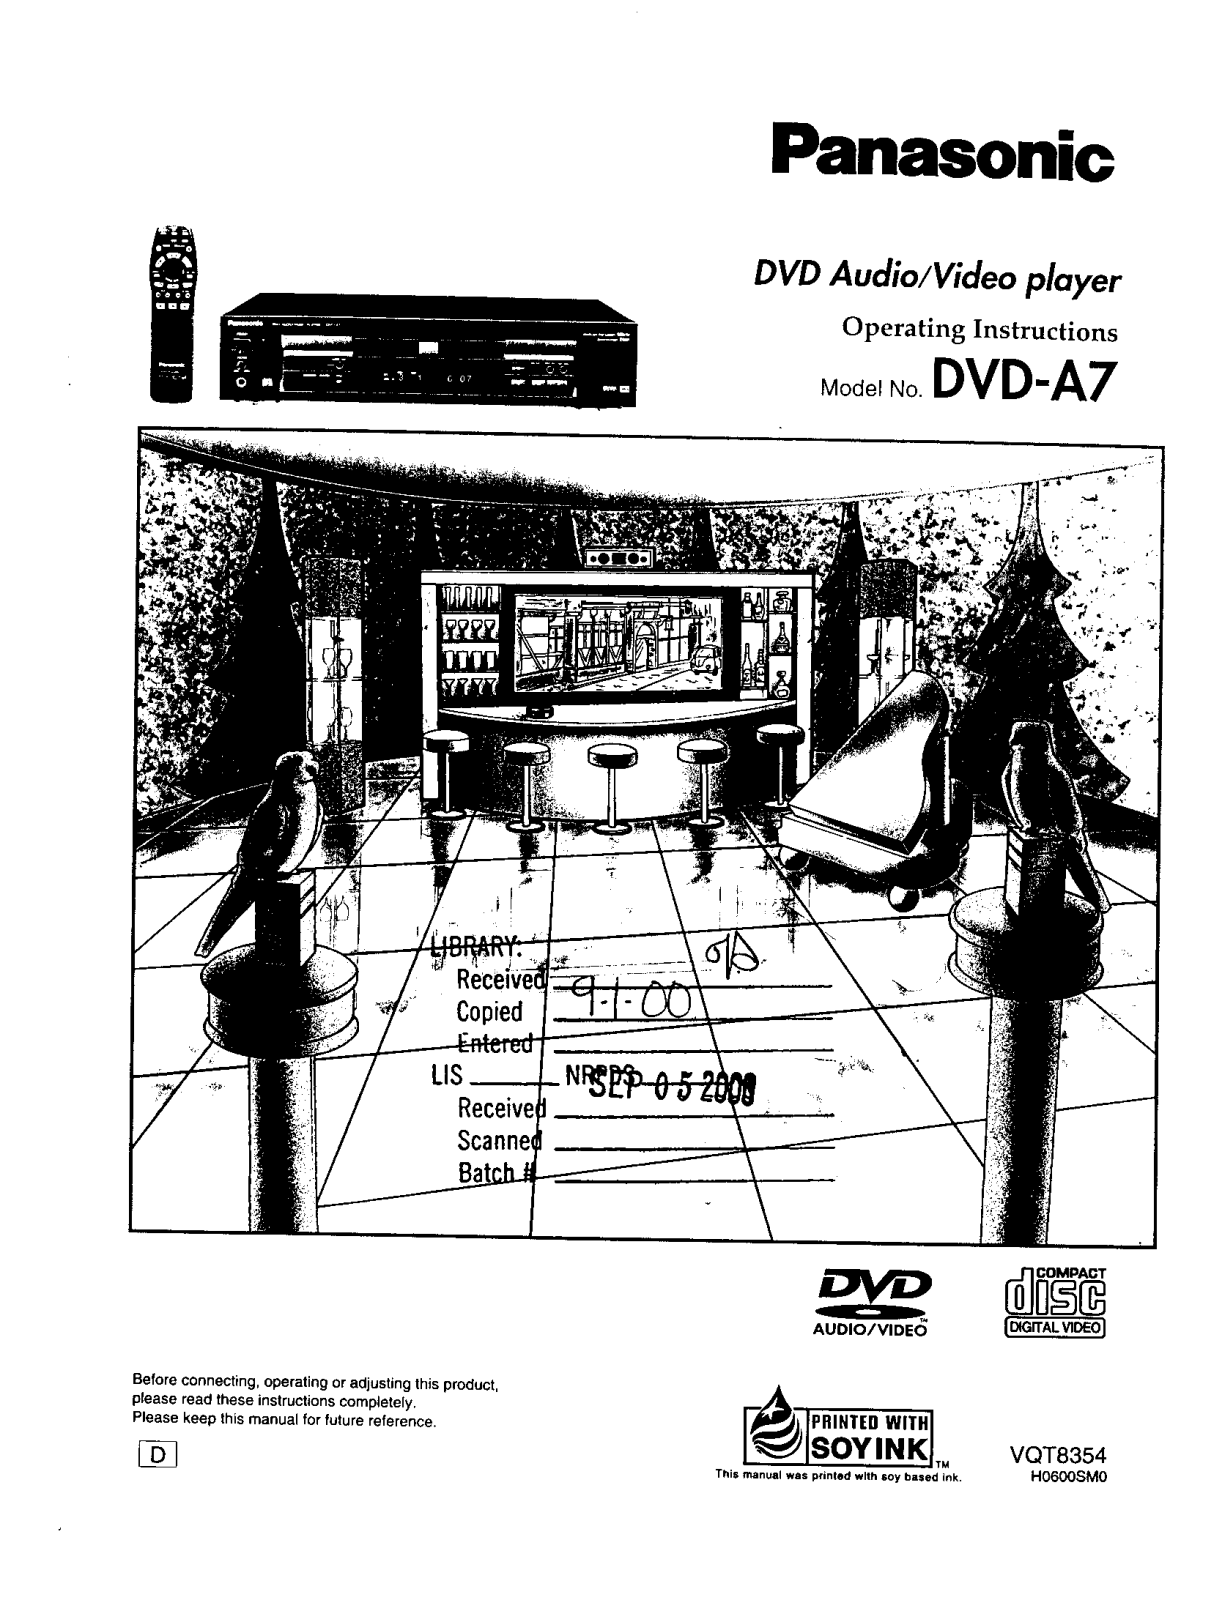 Panasonic DVD-A7 Owner’s Manual